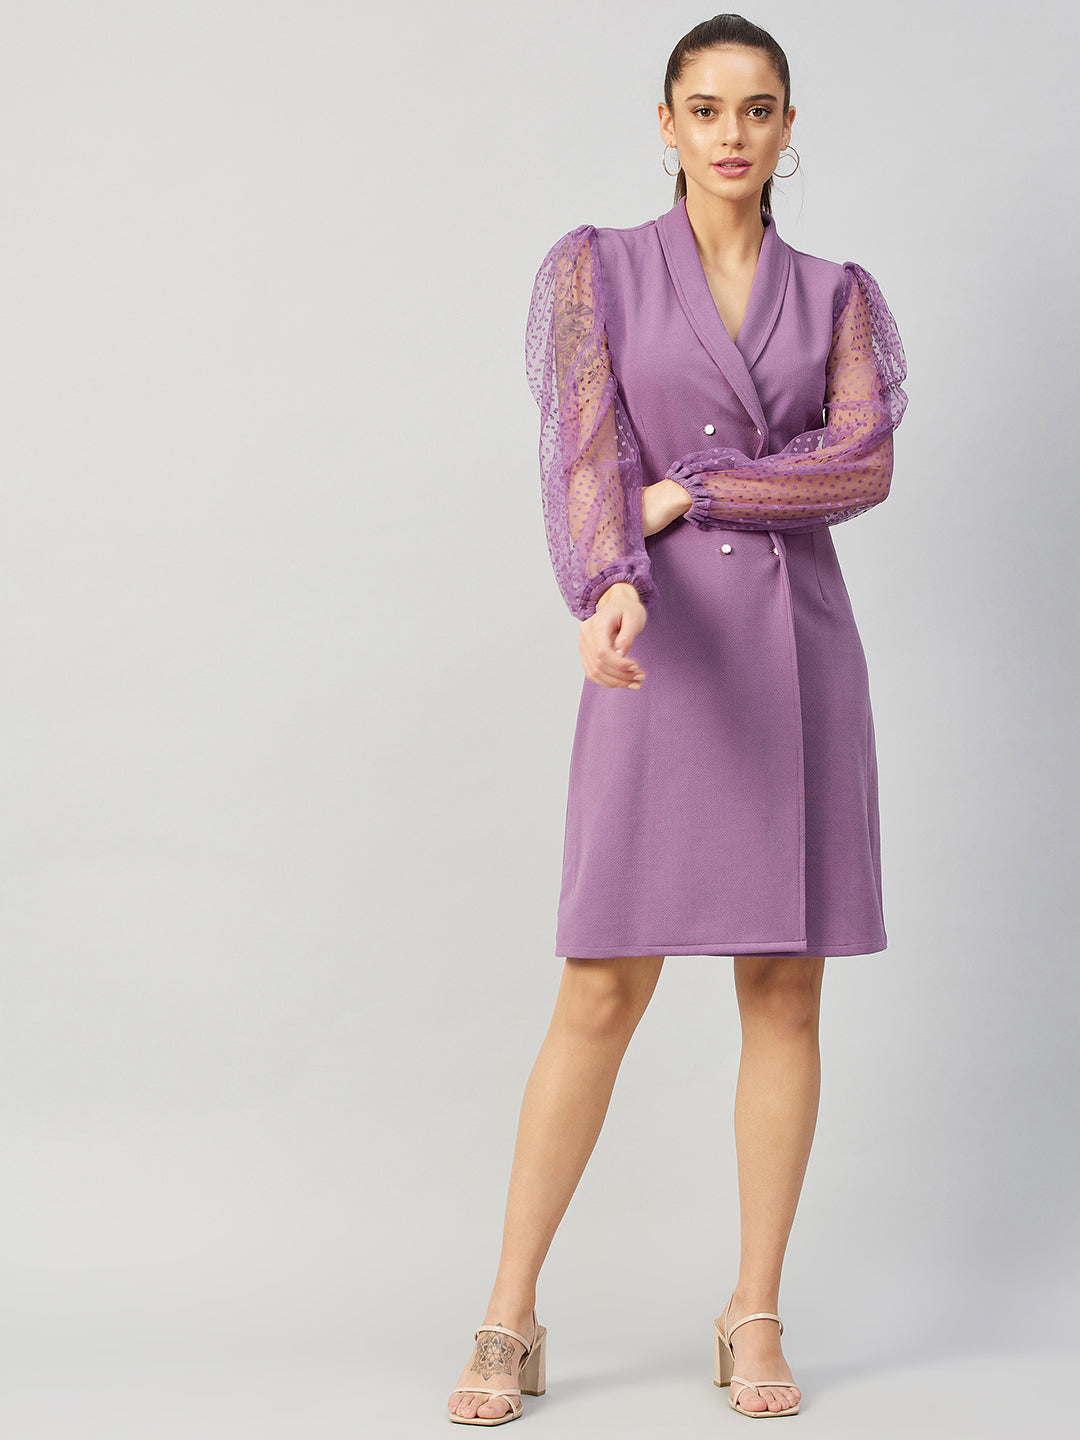 Athena Women Lavender Lace Dress - Athena Lifestyle